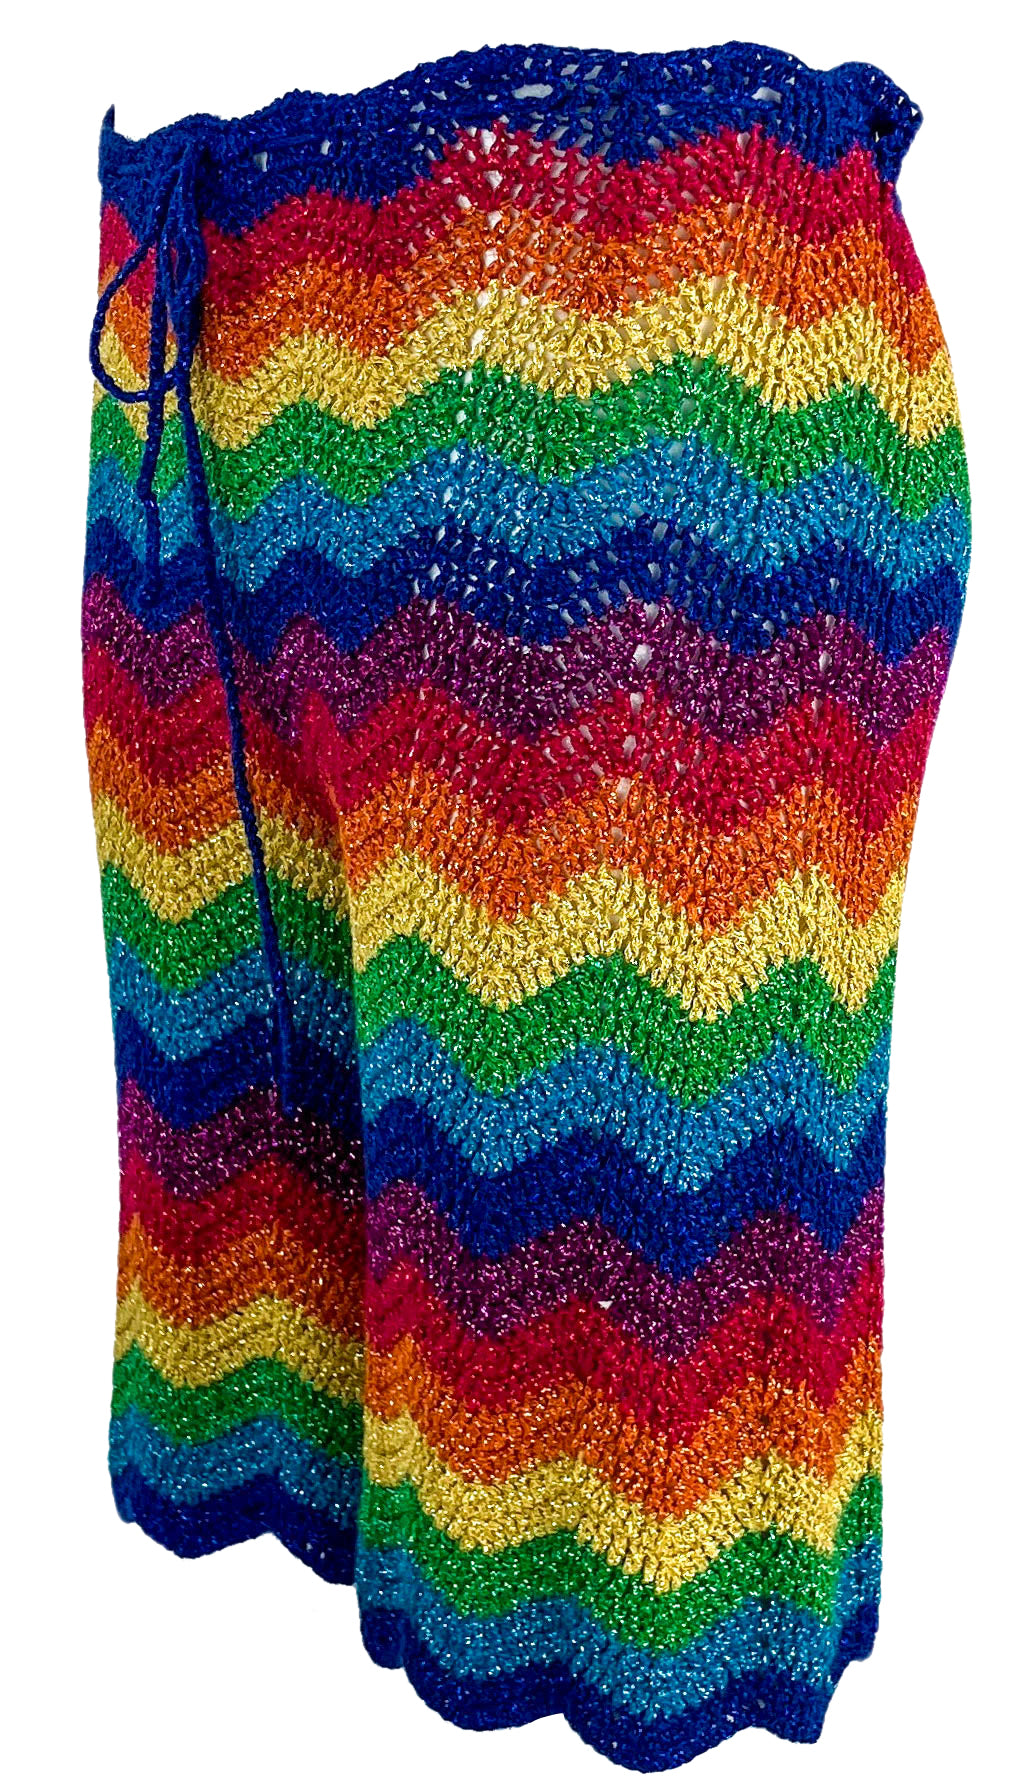 Rose Carmine Metallic Crochet Bermuda Shorts in Multi - Discounts on Rose Carmine at UAL